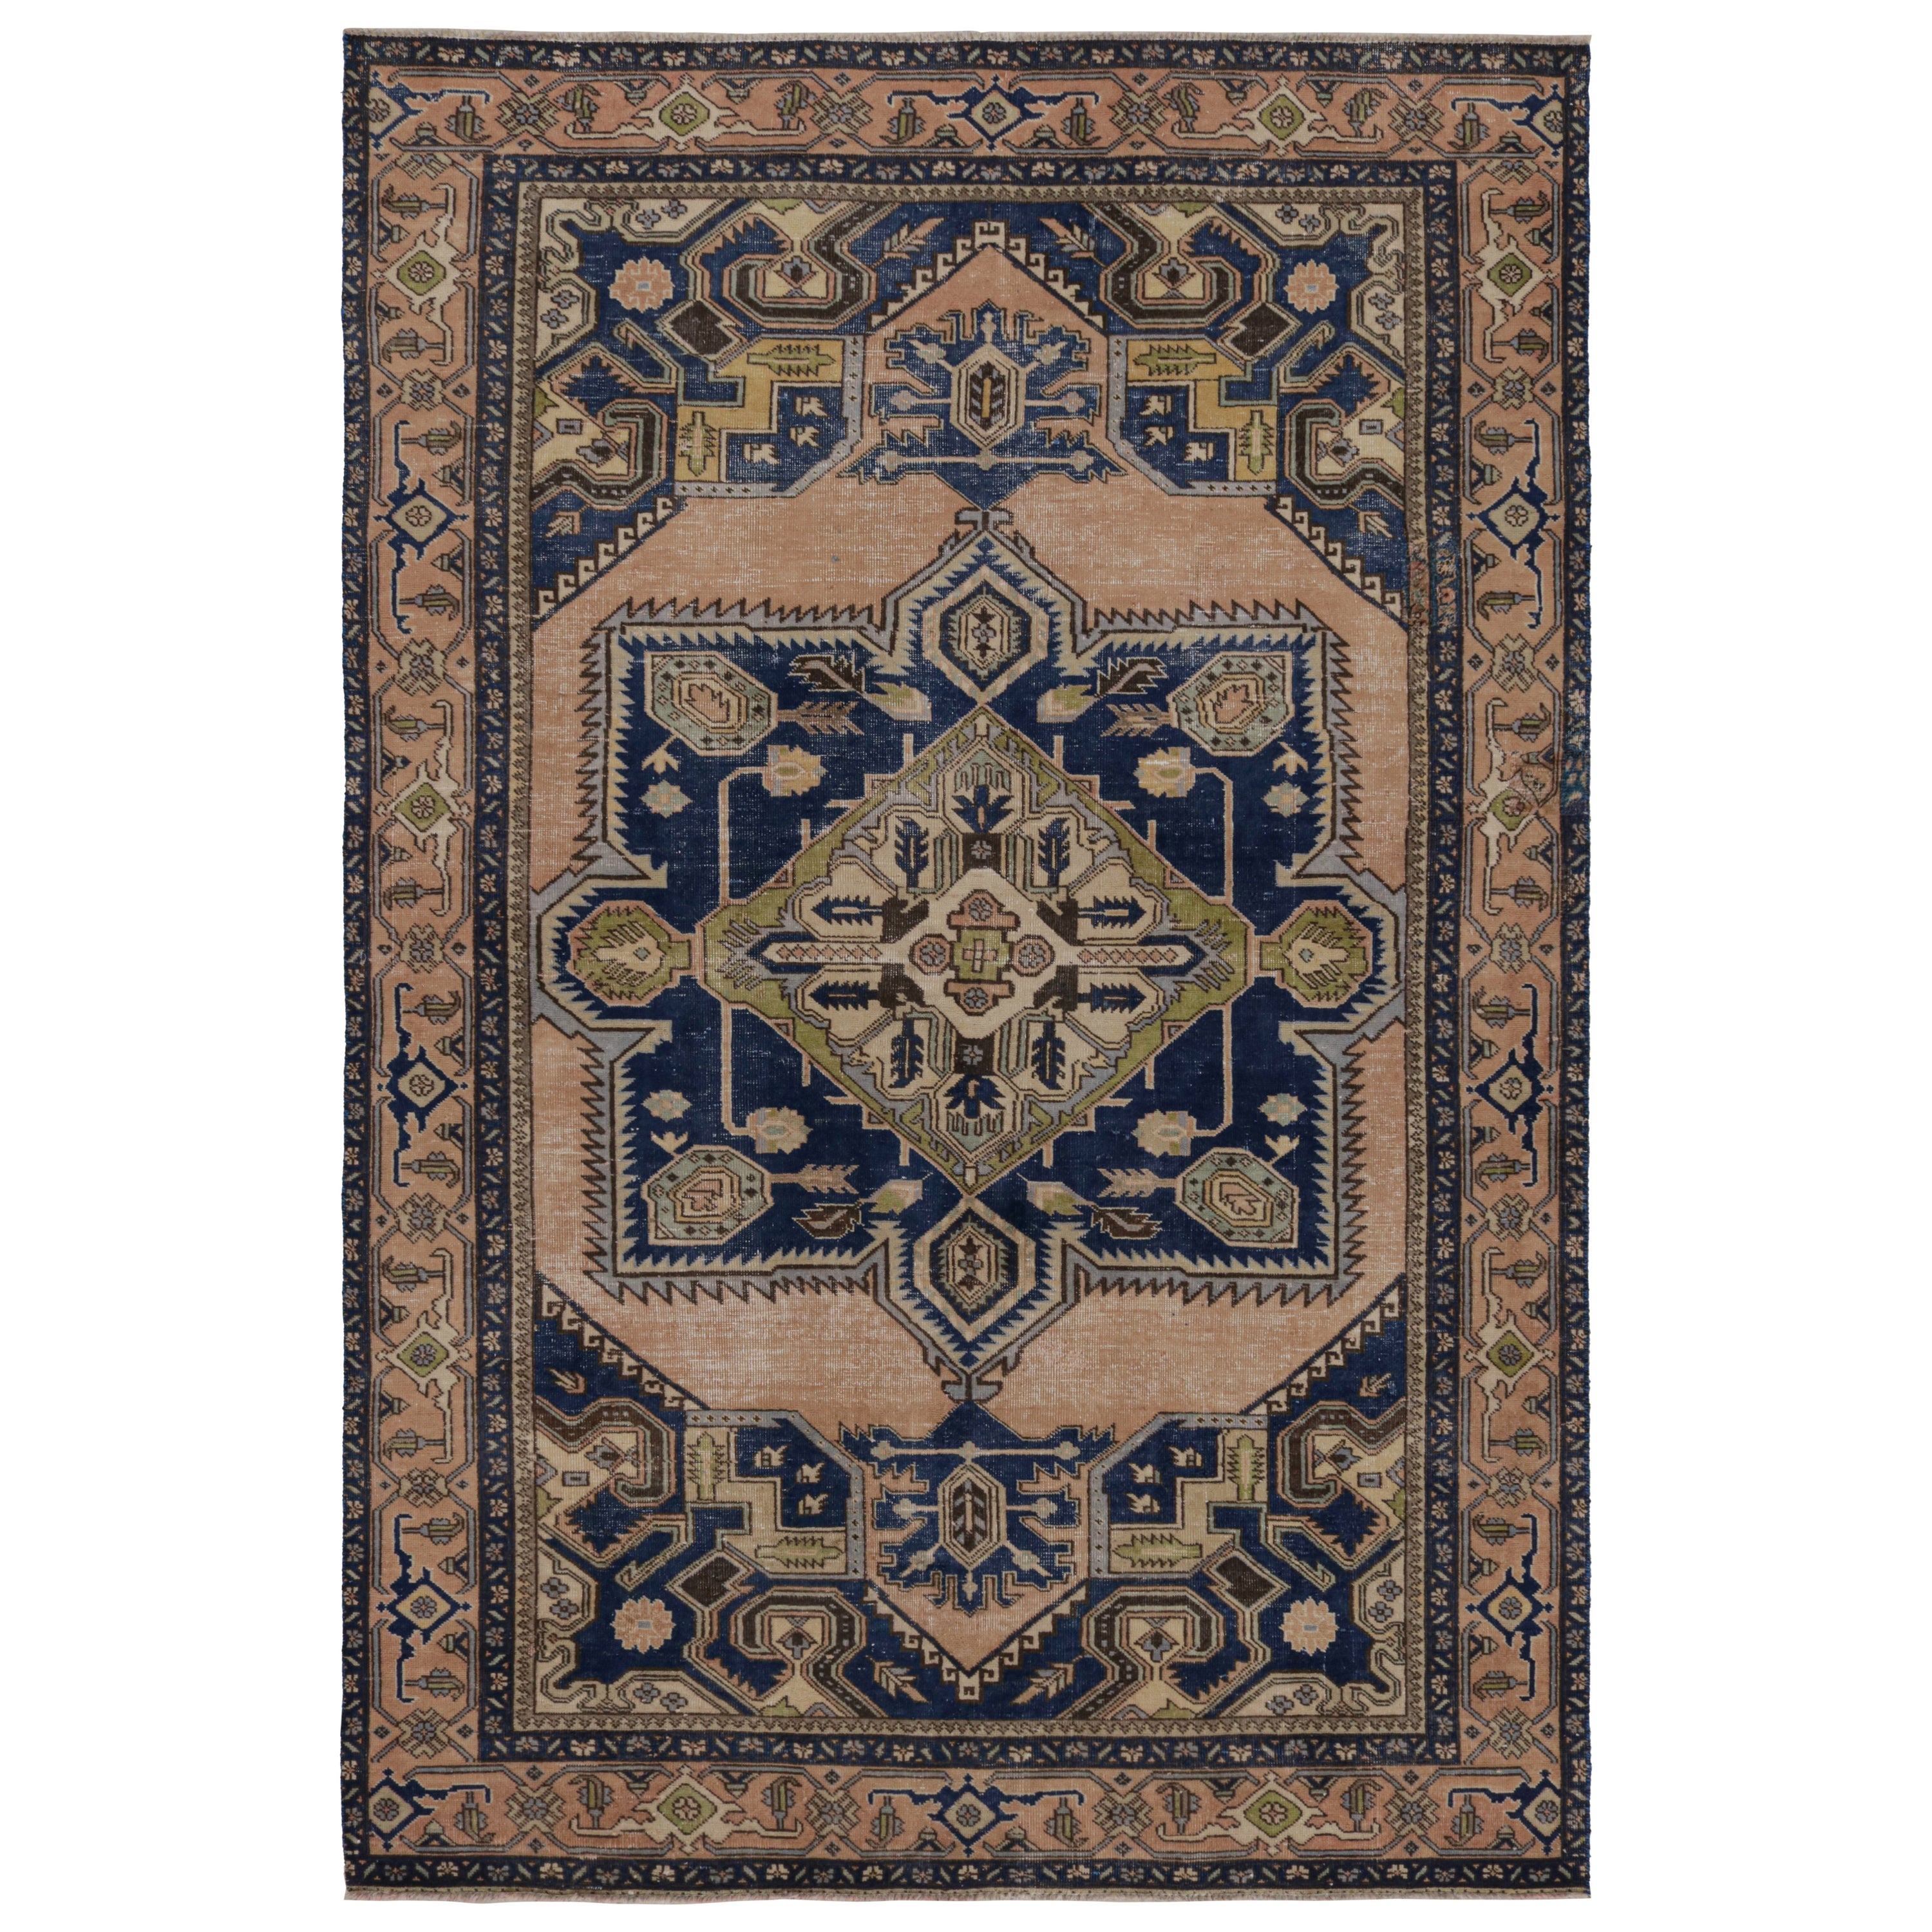 Vintage Tabriz rug in Beige-Brown and Blue Geometric Patterns by Rug & Kilim For Sale